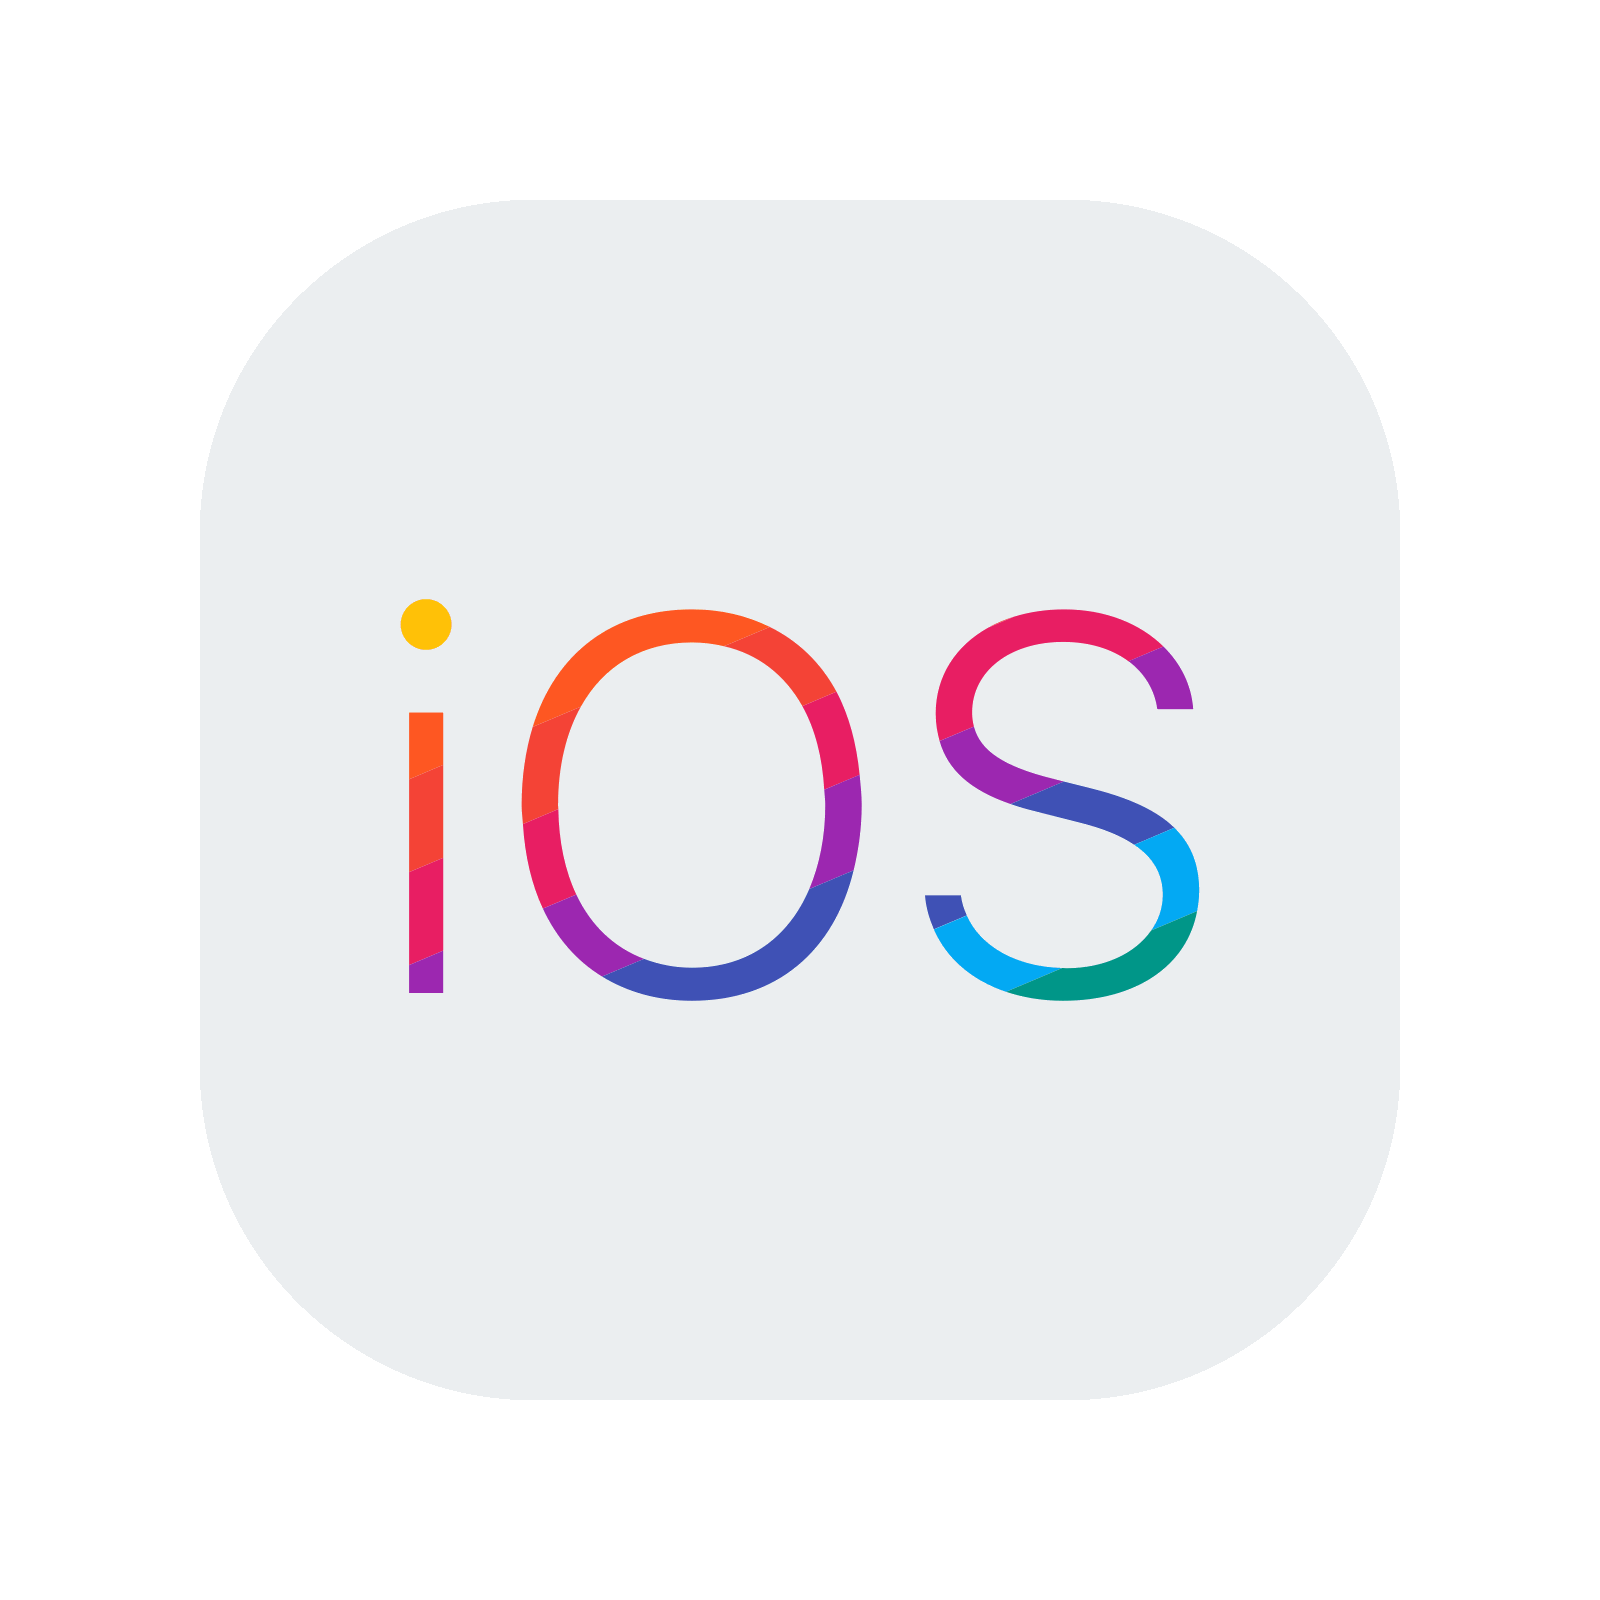 Ios Icon #113086 - Free Icons Library